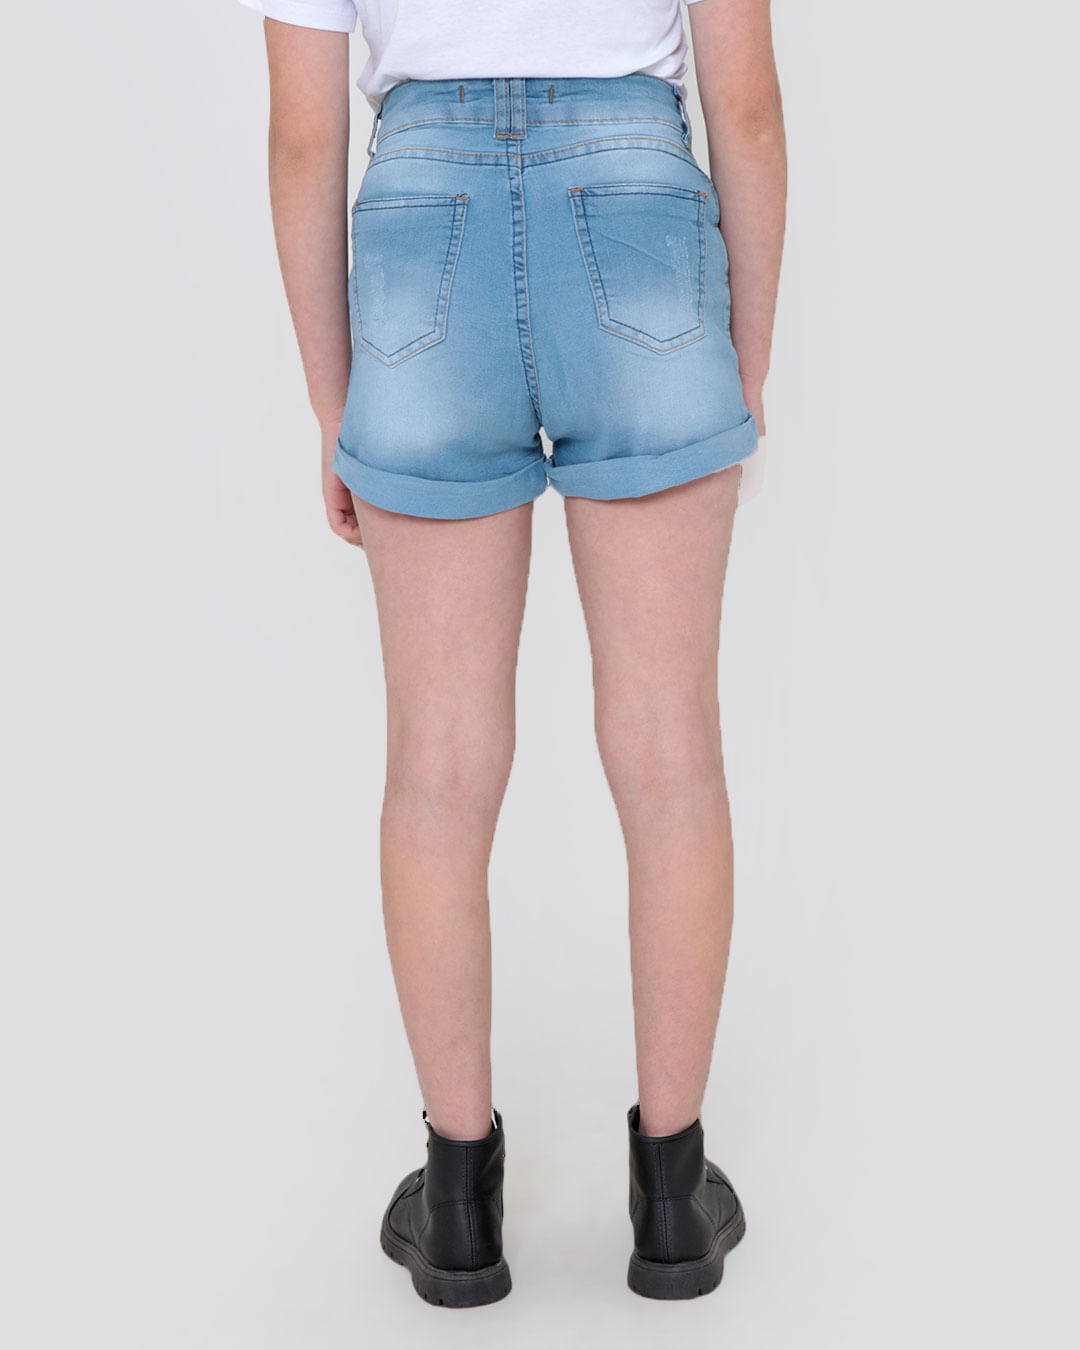 Short-Jeans-Juvenil-Strass-Cintura-Alta-Azul-Claro